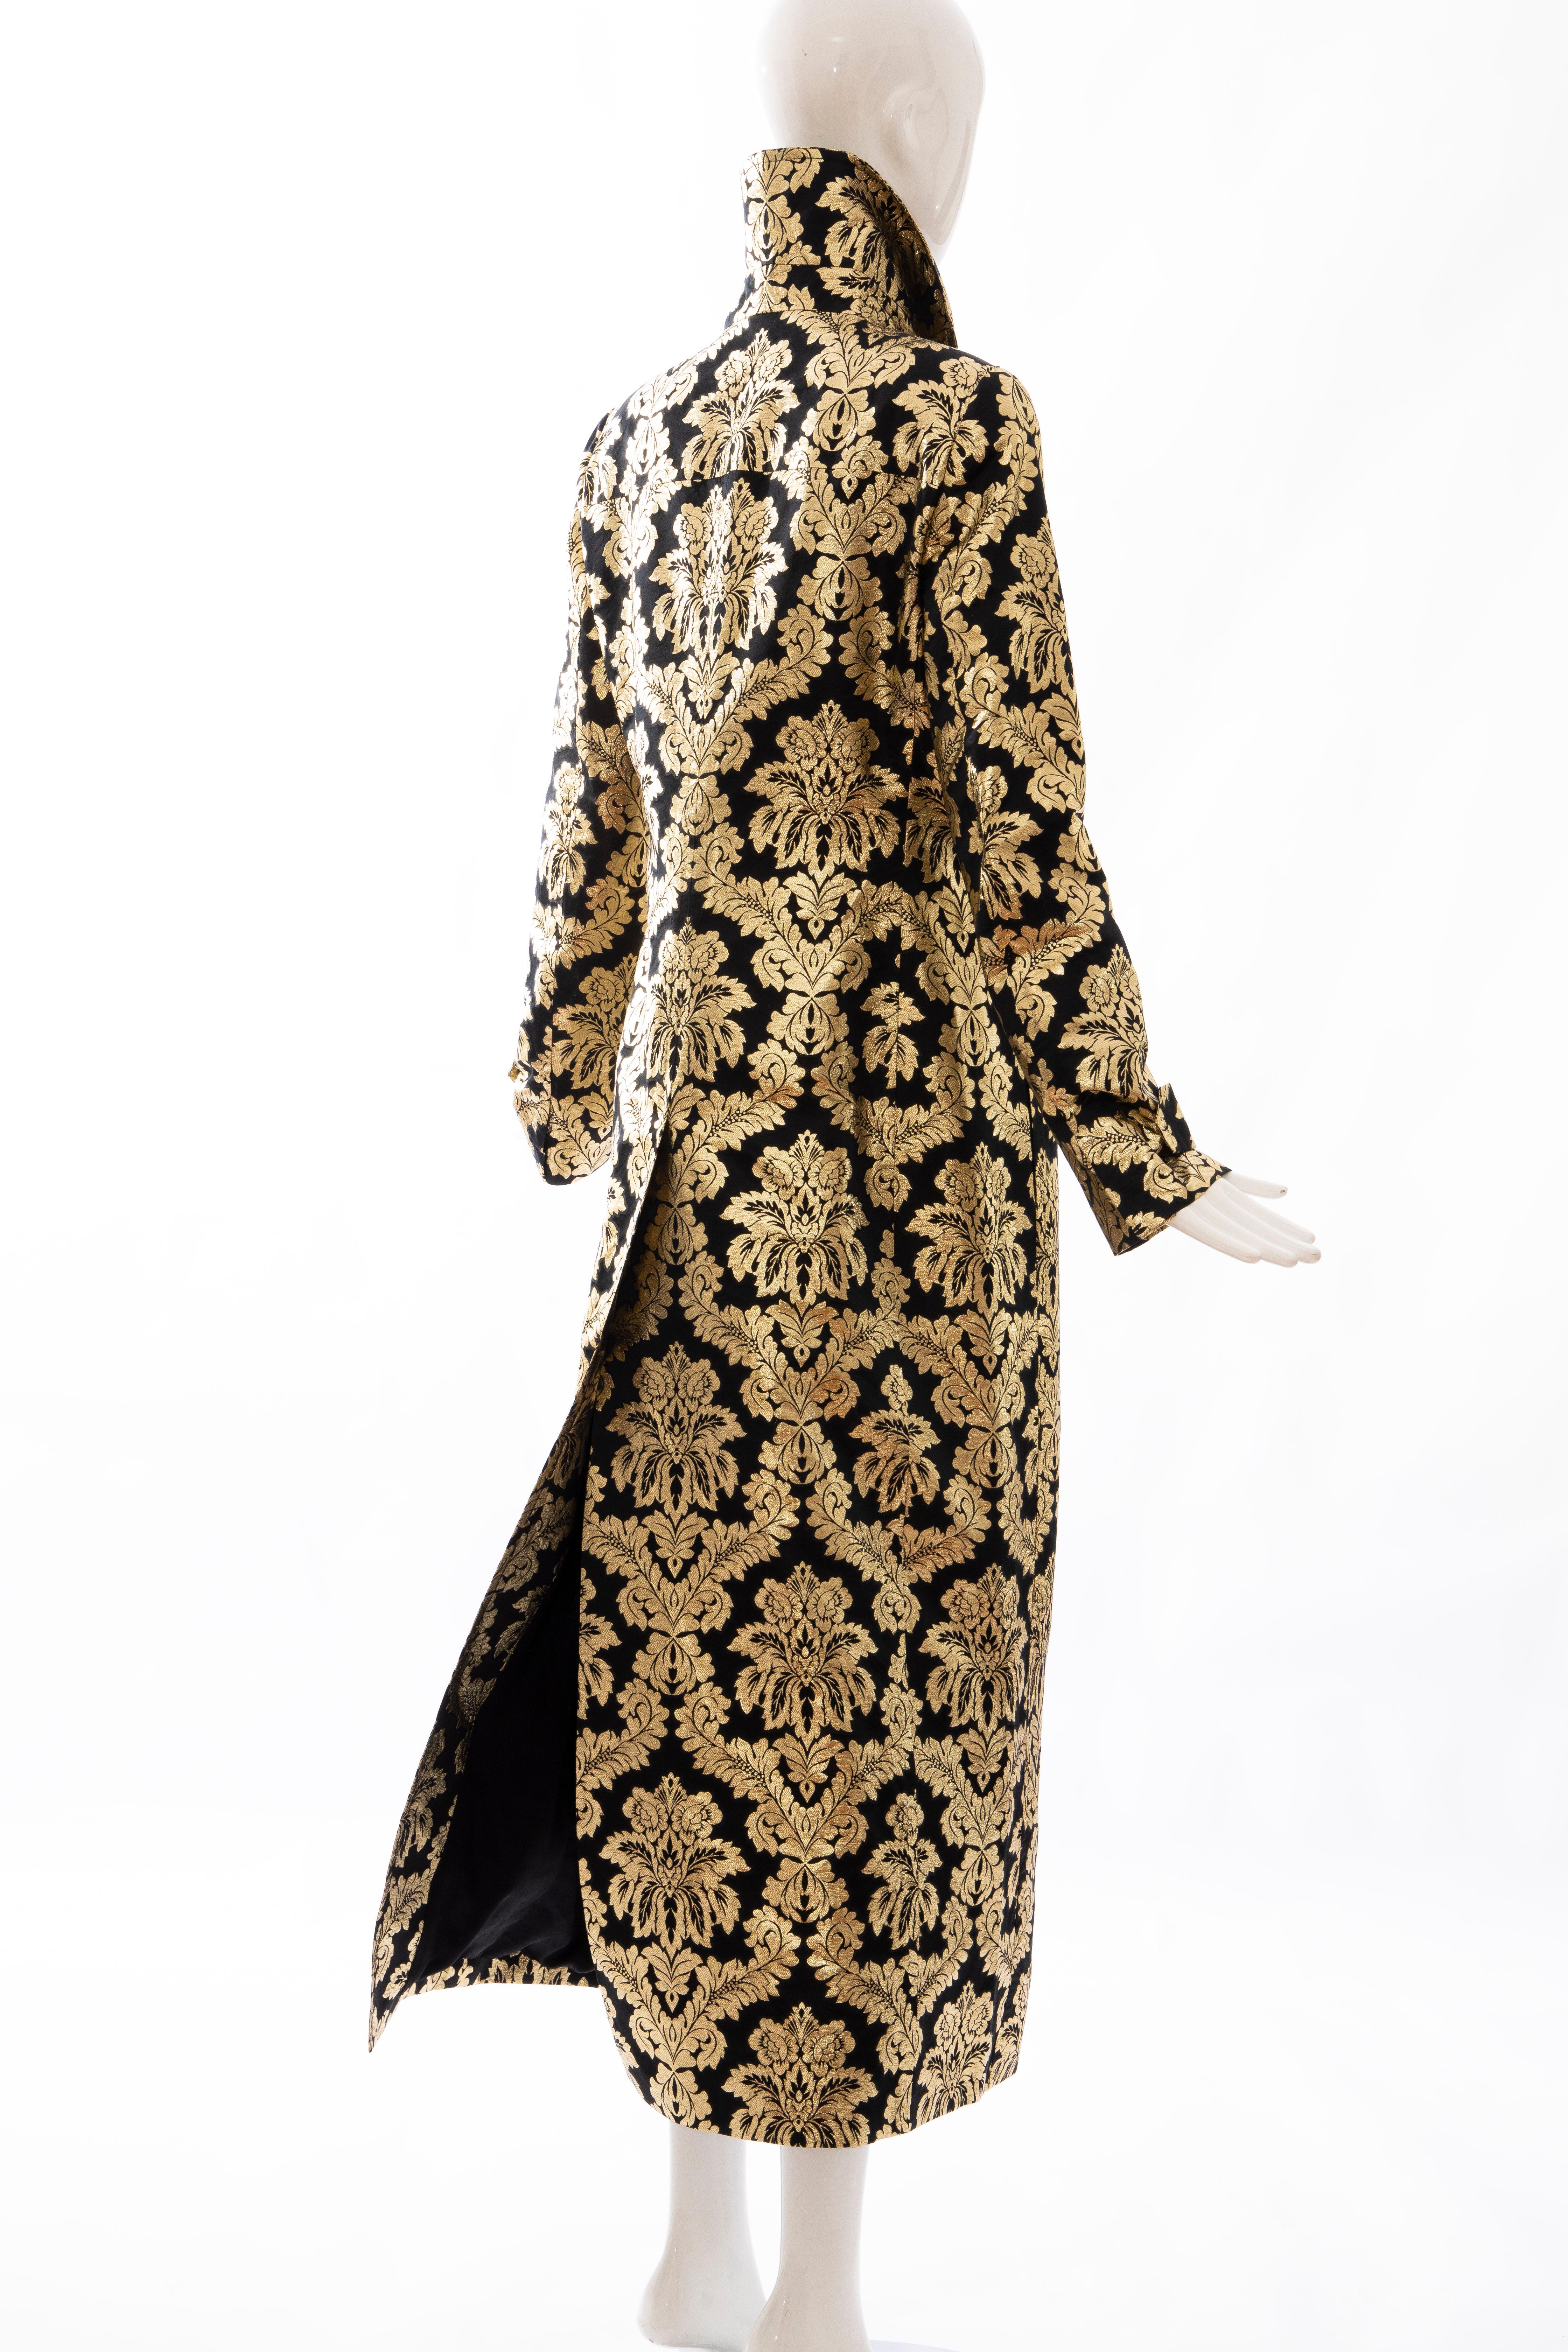 Dolce & Gabbana Runway Black Silk Gold Floral Brocade Evening Coat, Fall 2000 For Sale 1